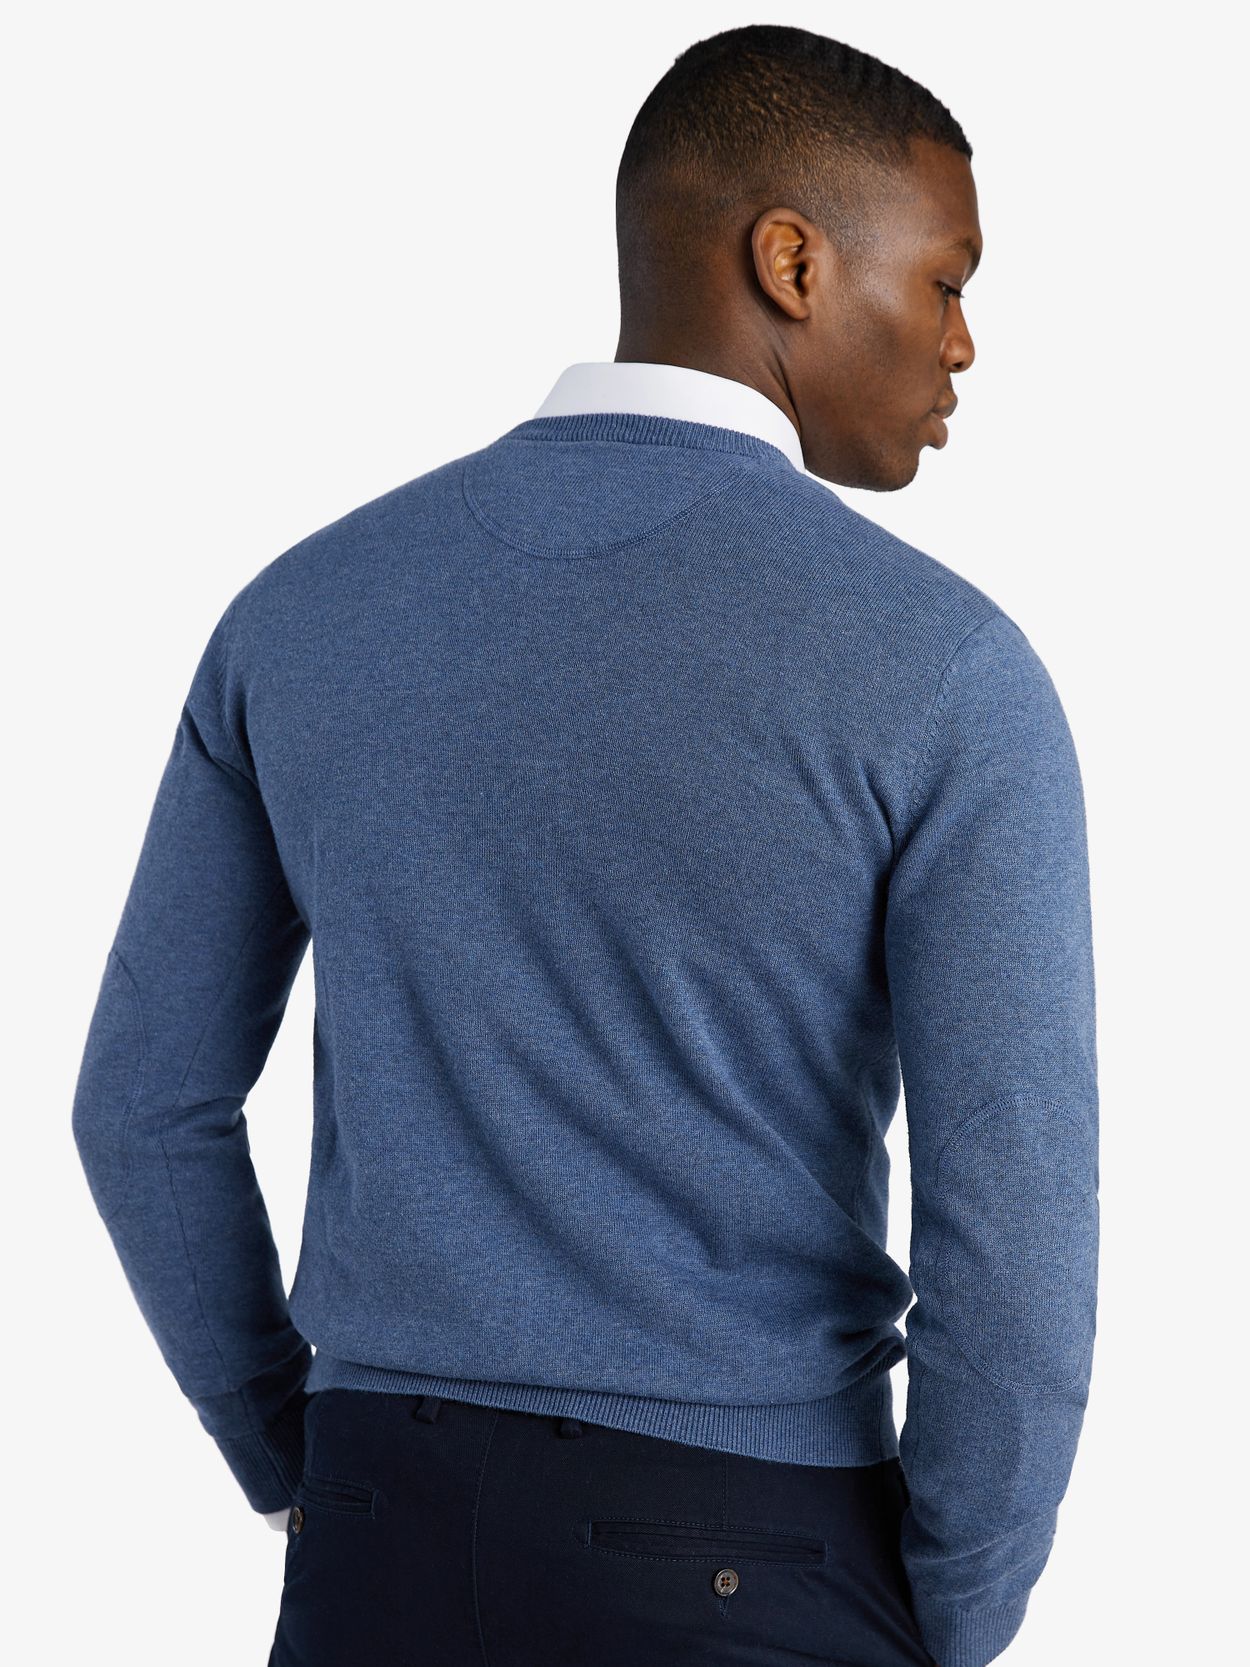 Blue Sweater Cotton